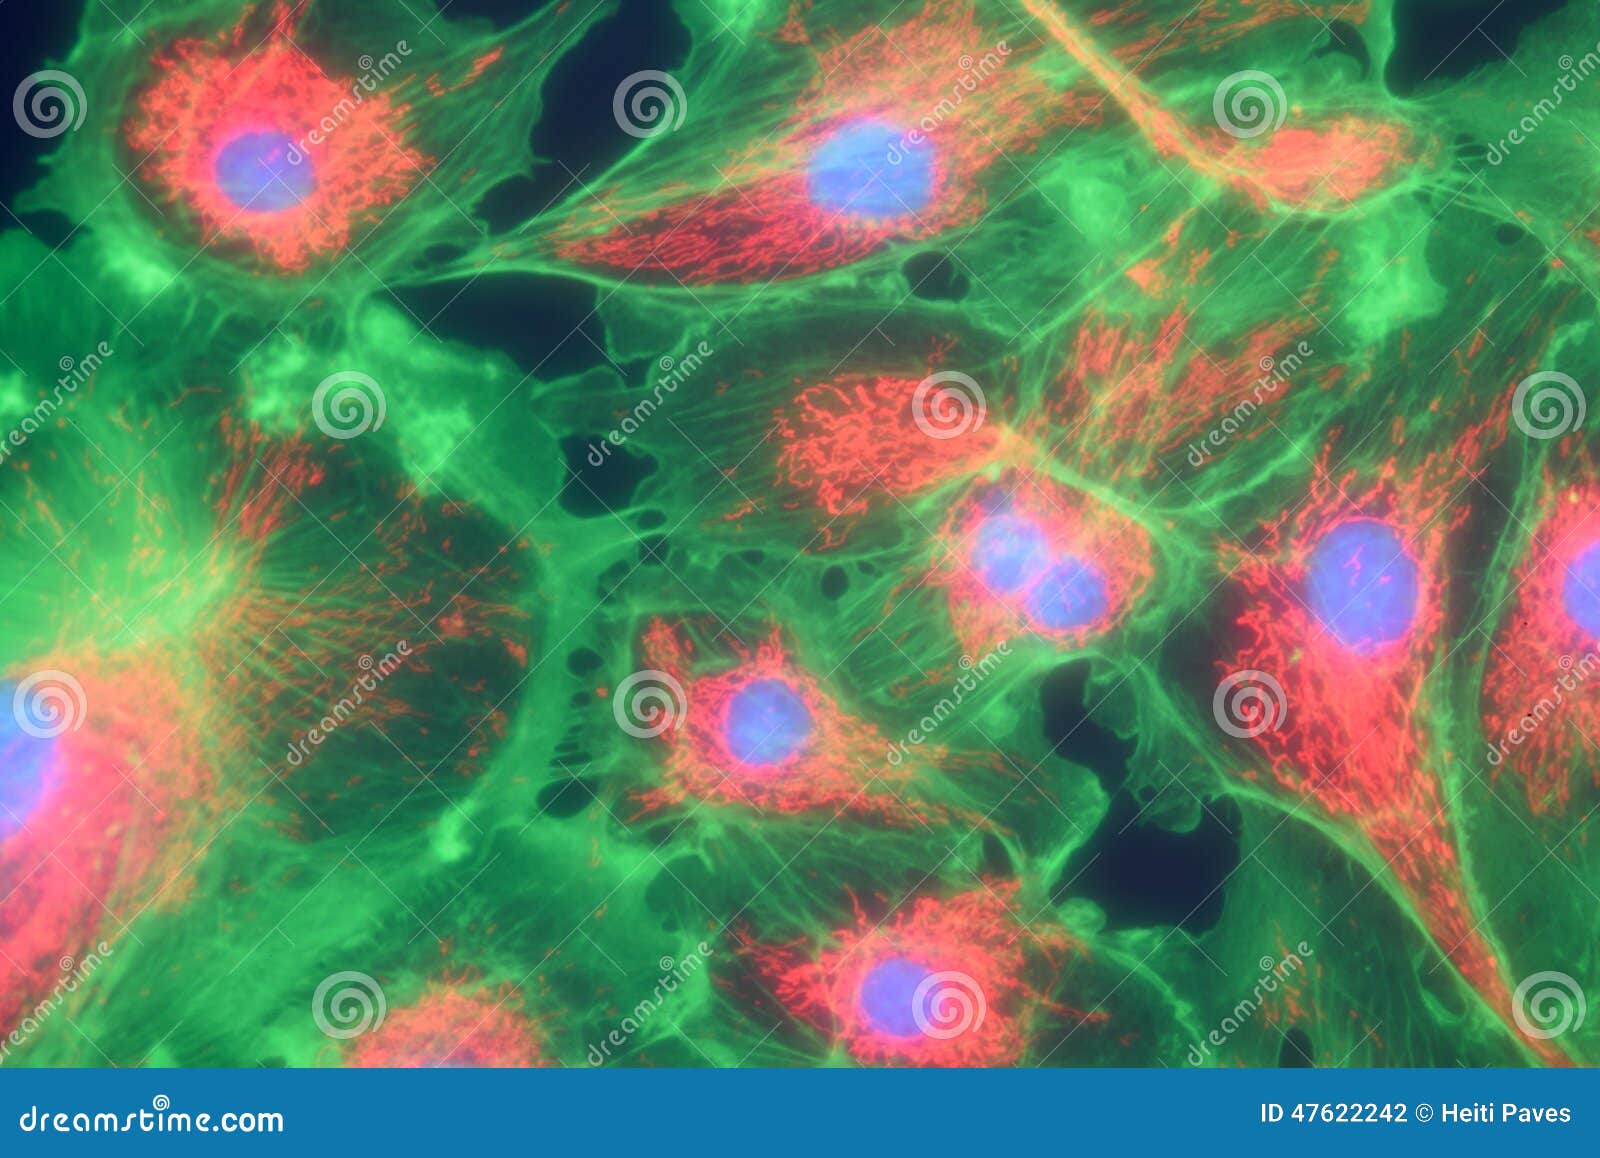 fibroblast cells mpressionistic